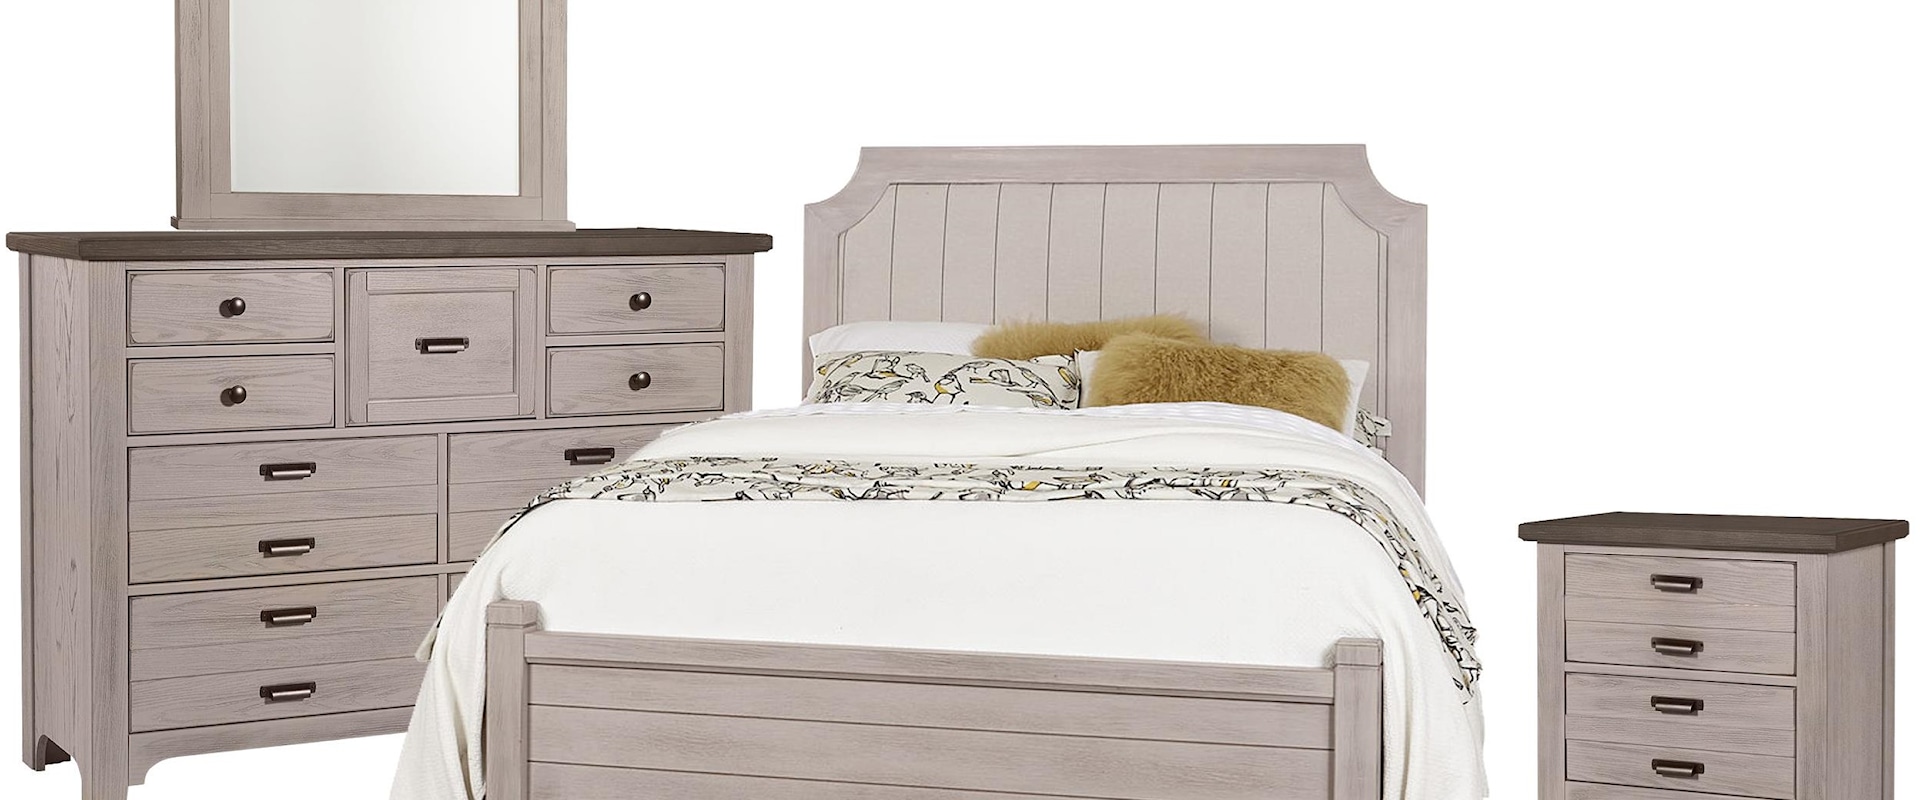 Queen Upholstered Bed, 9 Drawer Dresser, Master Arch Mirror, 2 Drawer Nightstand